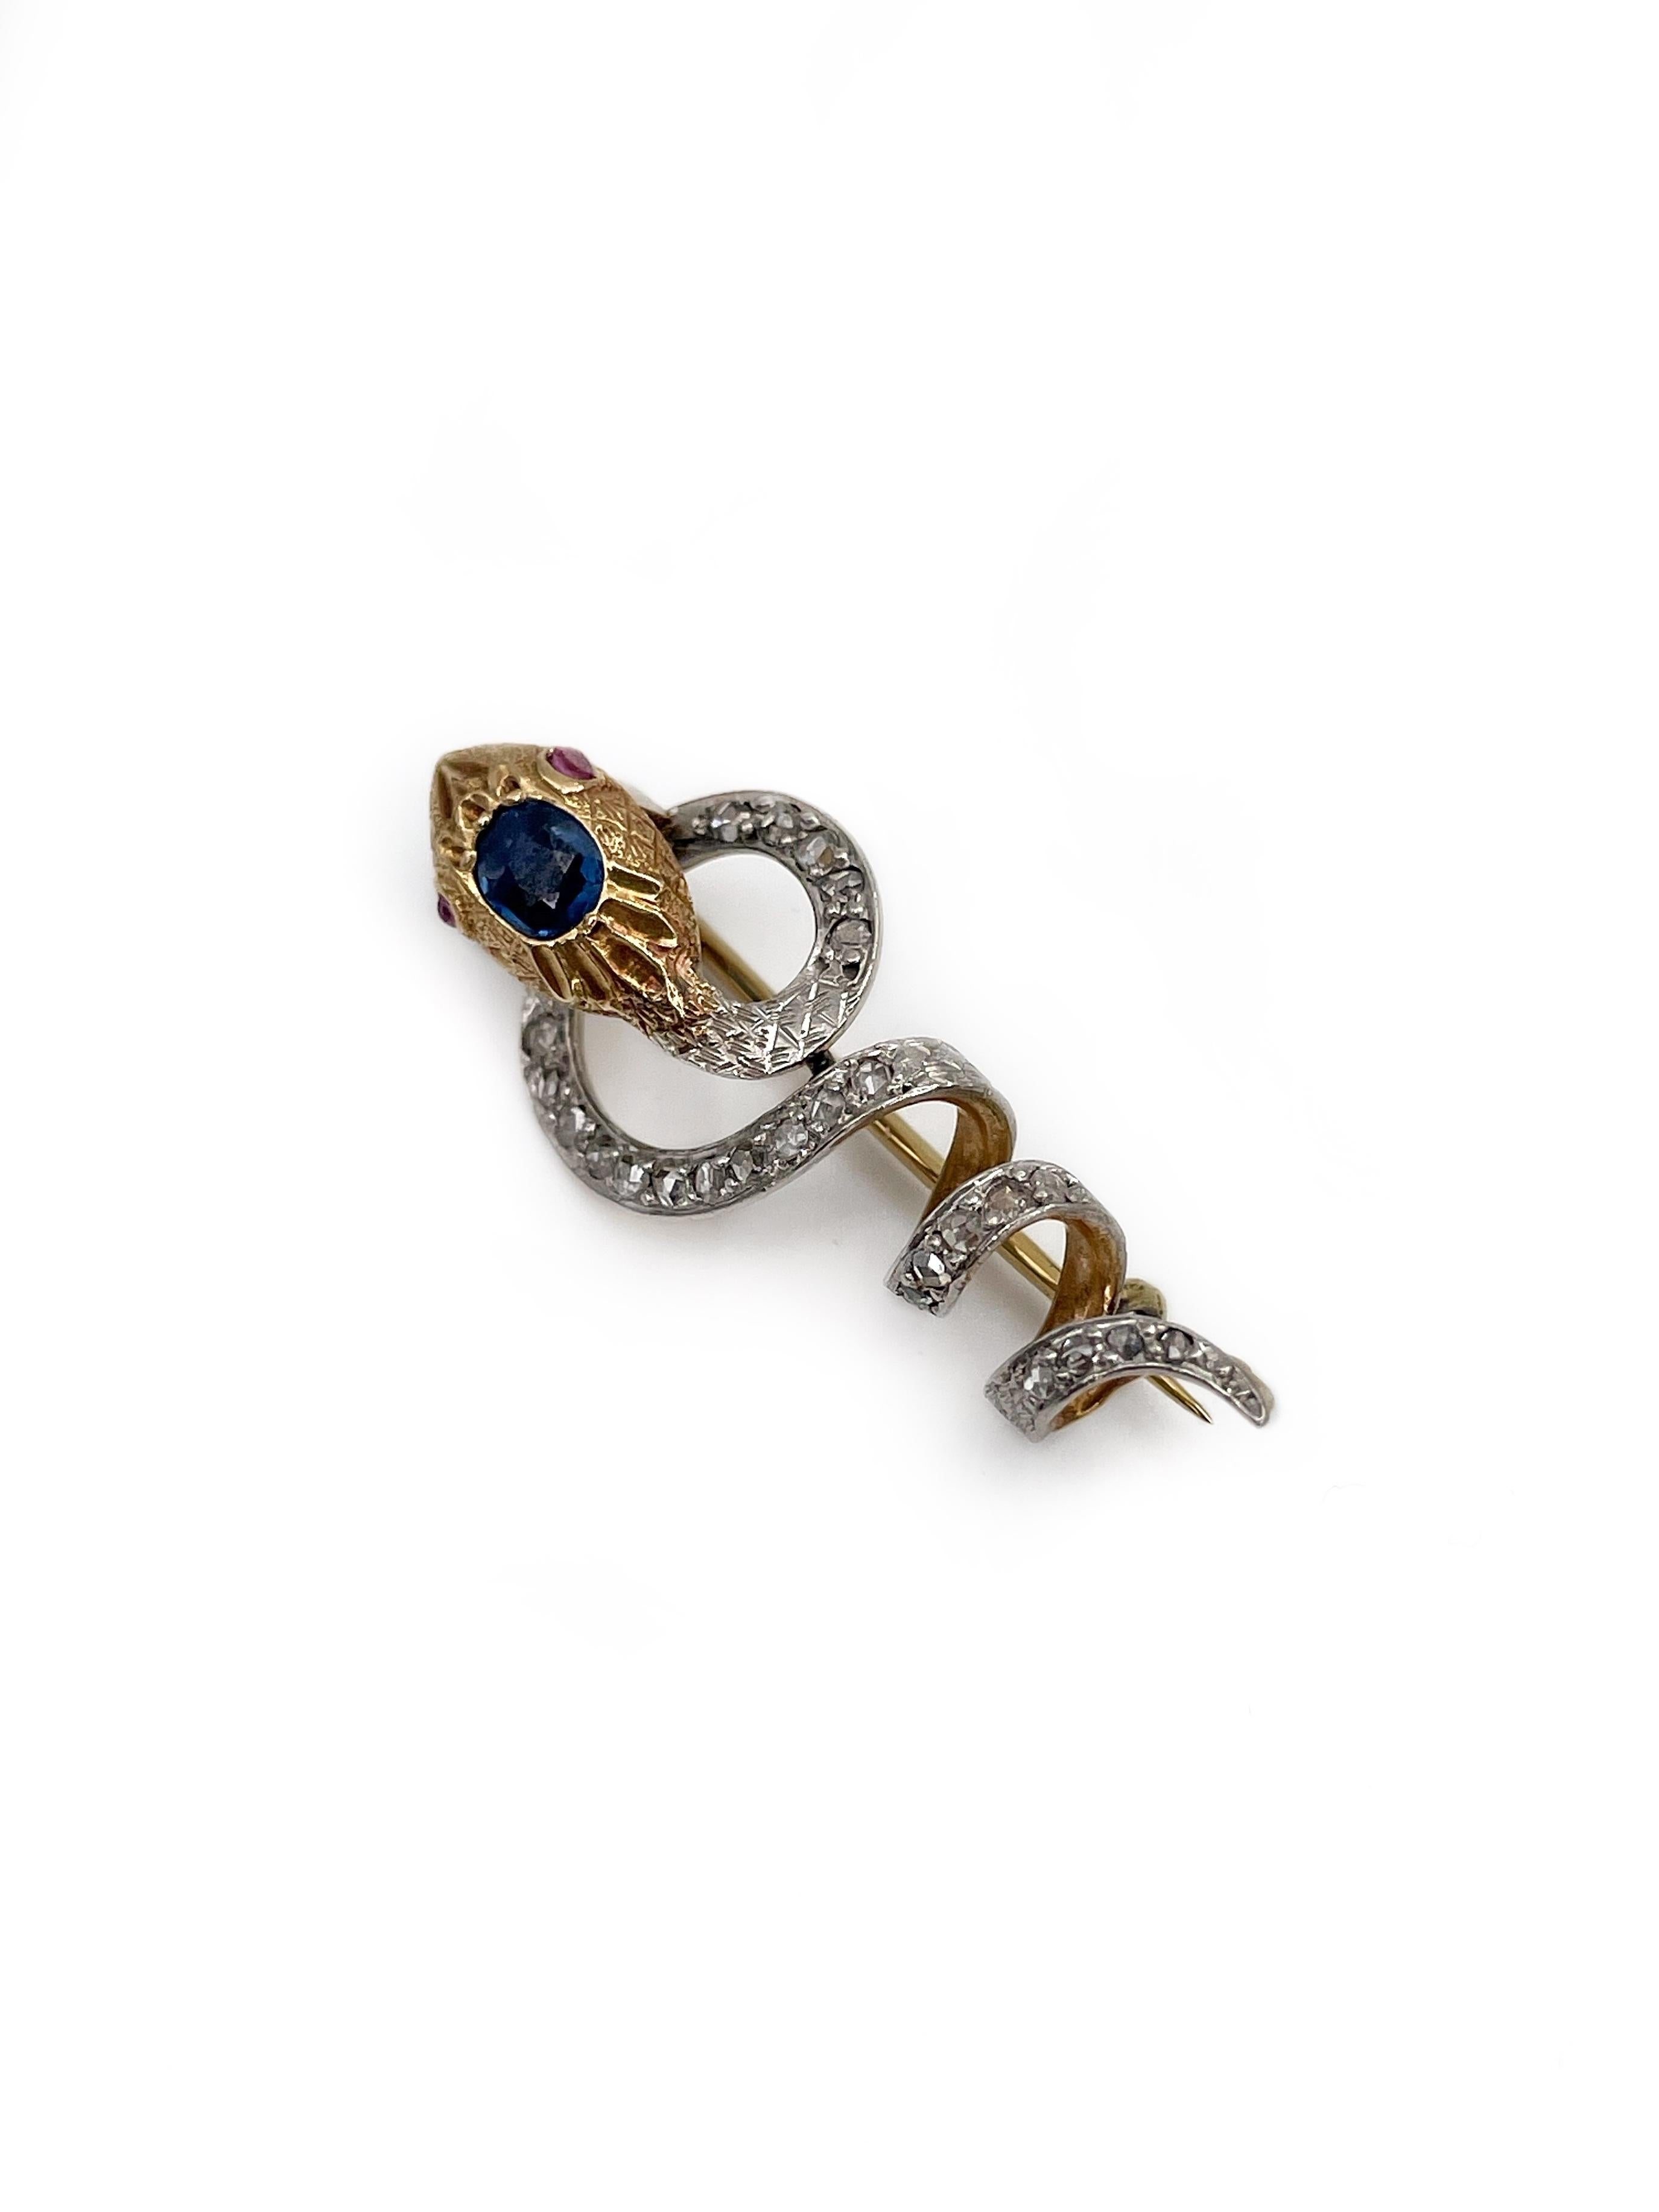 Antique Victorian 18 Karat Gold Sapphire Ruby Rose Cut Diamond Snake Pin Brooch 4